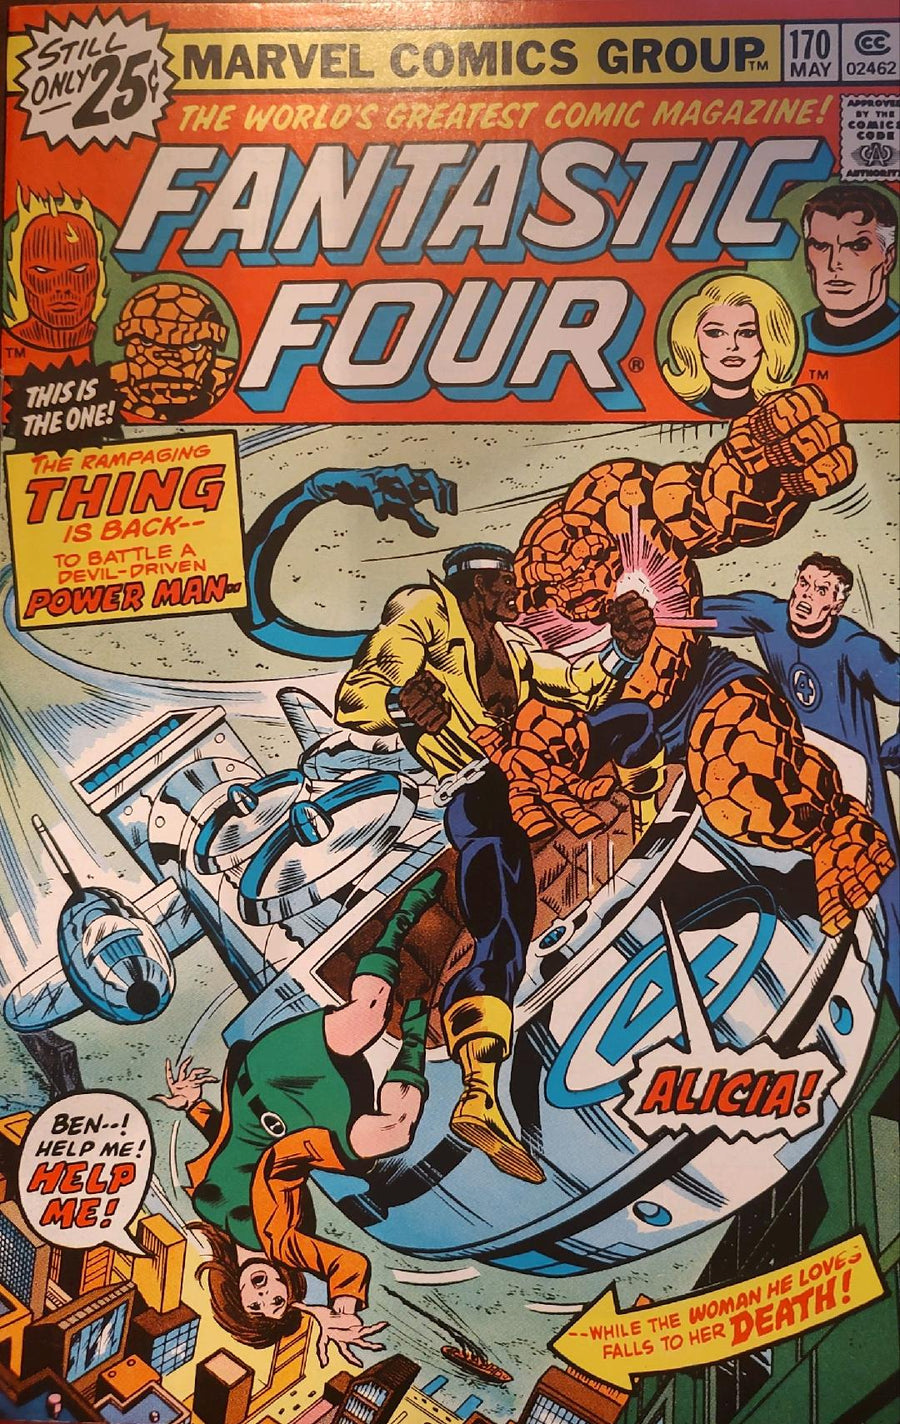 Fantastic Four #170 Comic Book Cover